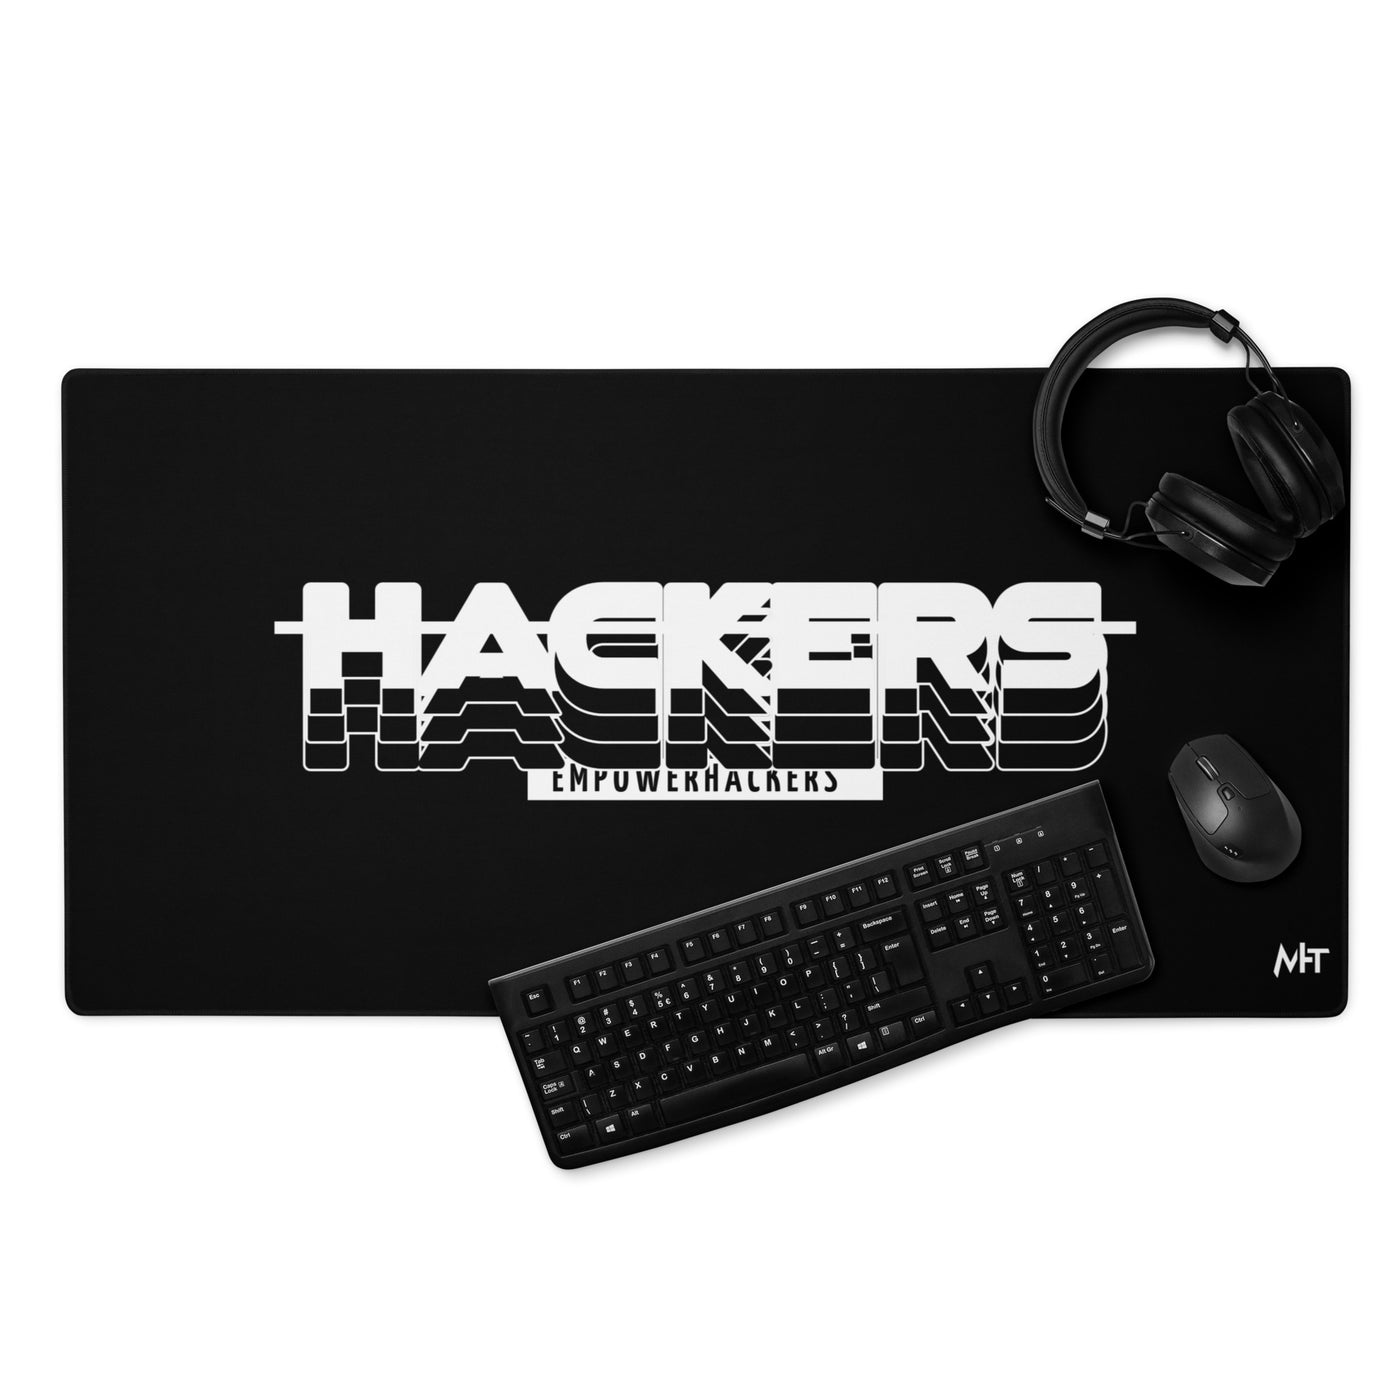 Hackers Empower Hackers V3 - Desk Mat